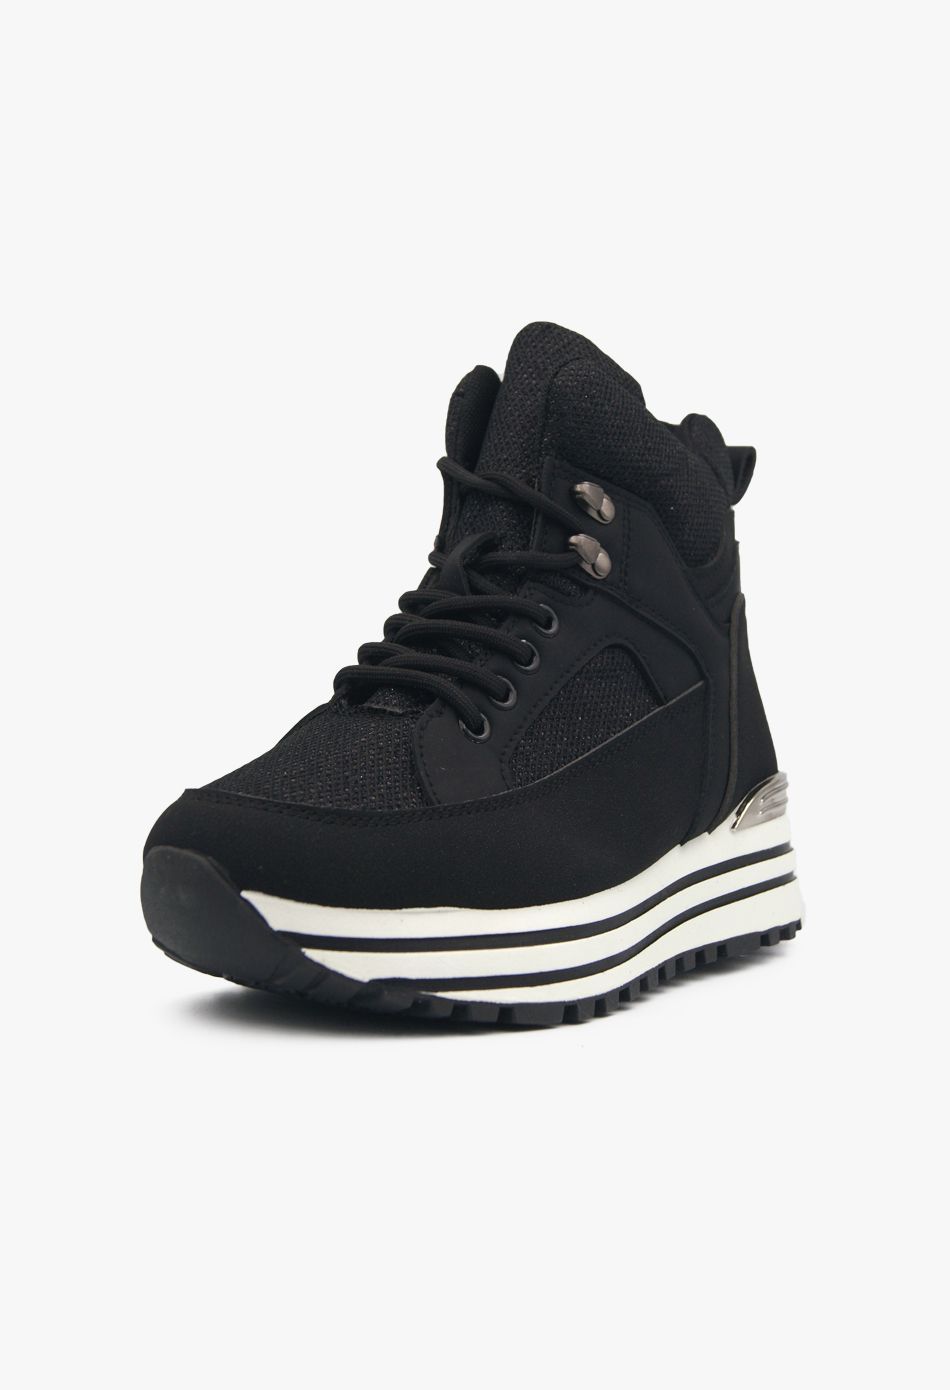 Sneakers Μποτάκια Μαύρο / FF-55-black Γυναικεία Αθλητικά και Sneakers joya.gr